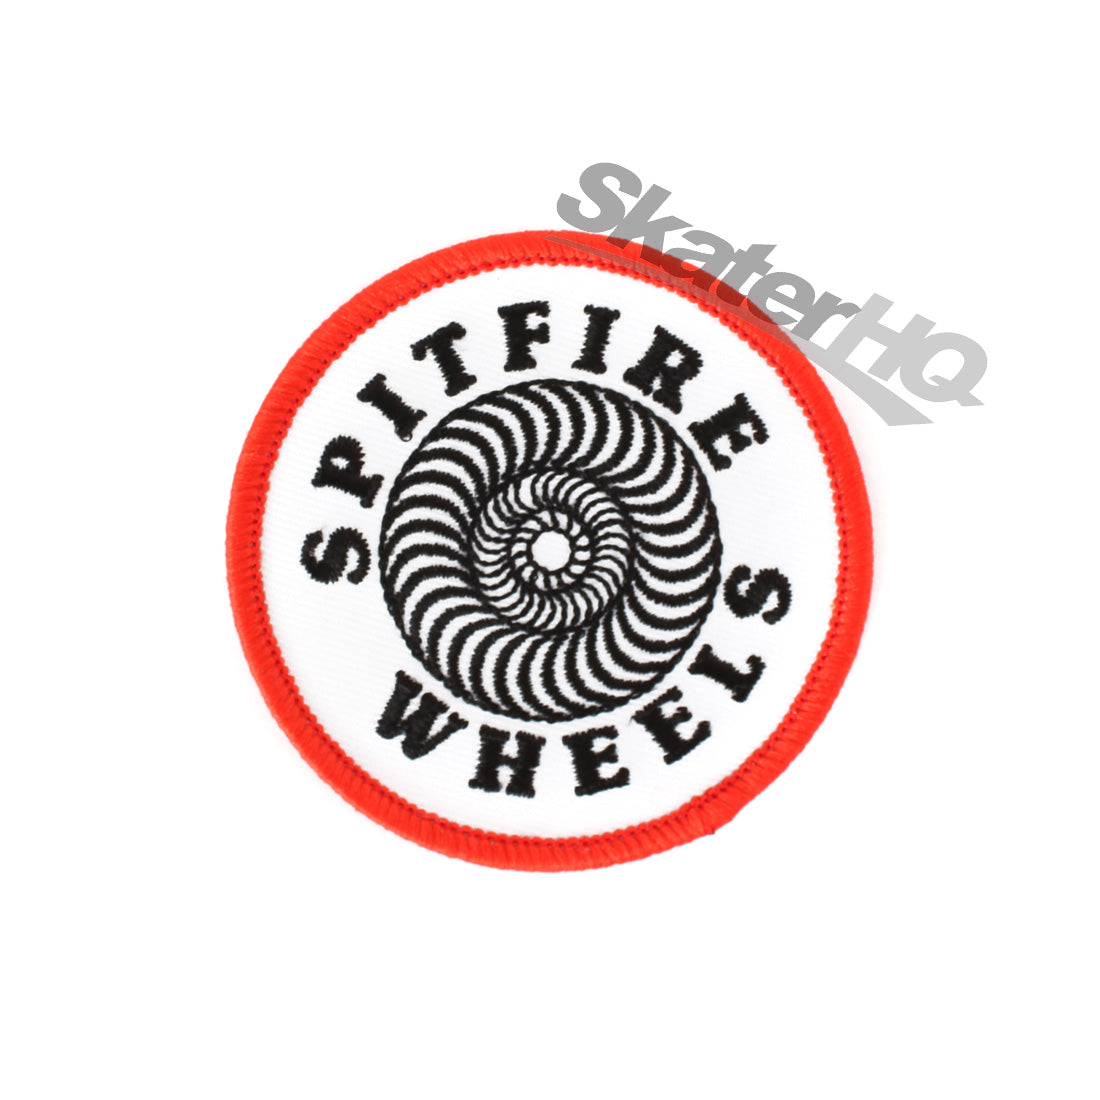 Spitfire Patch Classic Swirl Sticker - White/Black/Red Skateboard Accessories